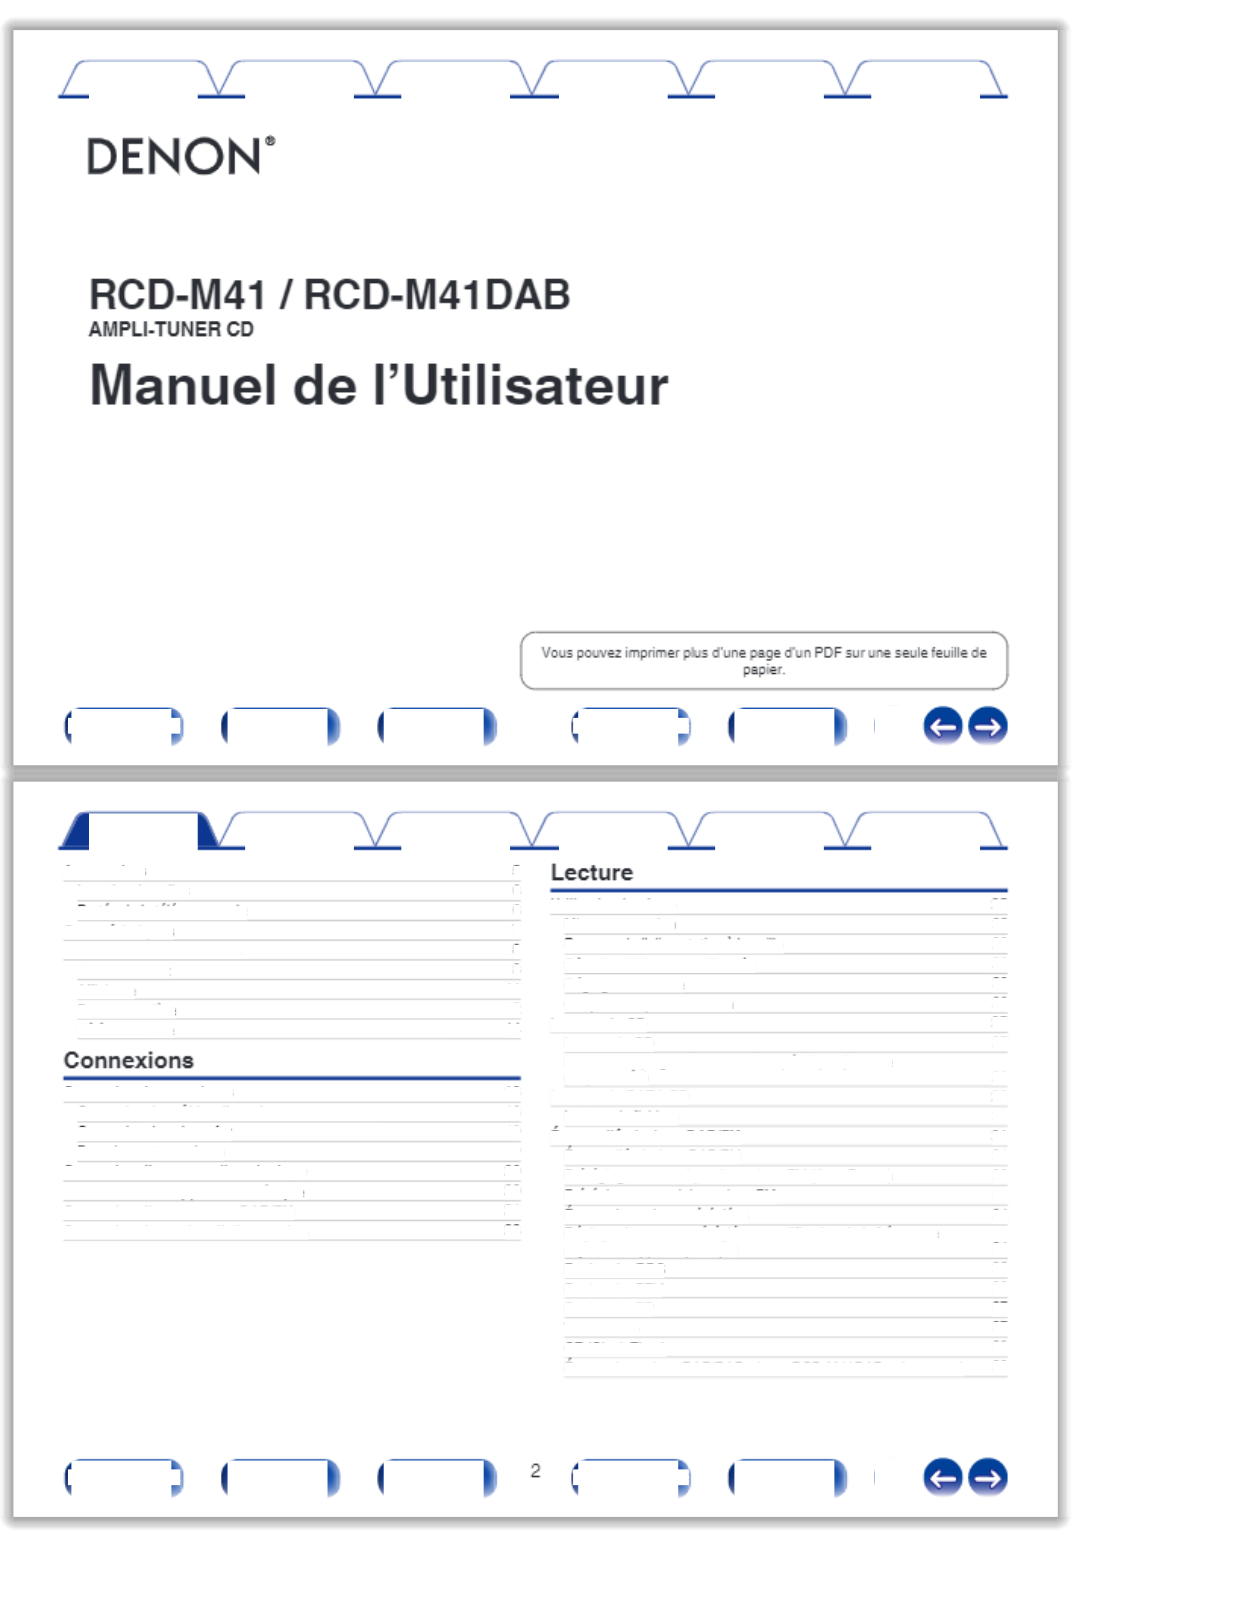 Denon RCD-M41, RCD-M41DAB User Manual